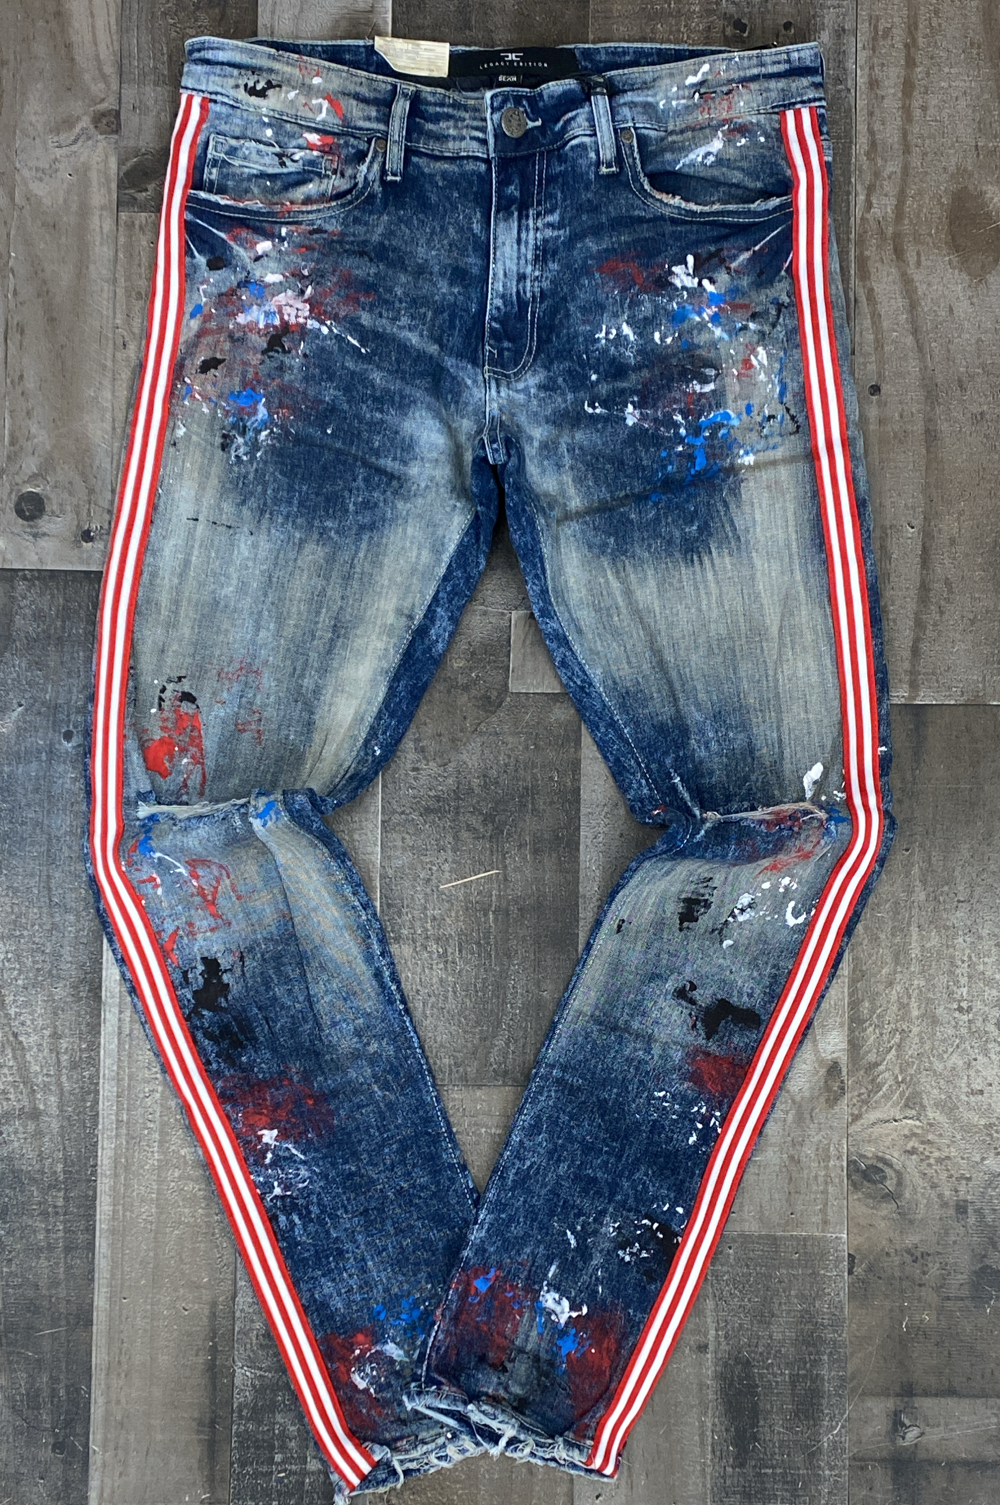 Jordan Craig- striped painted jeans